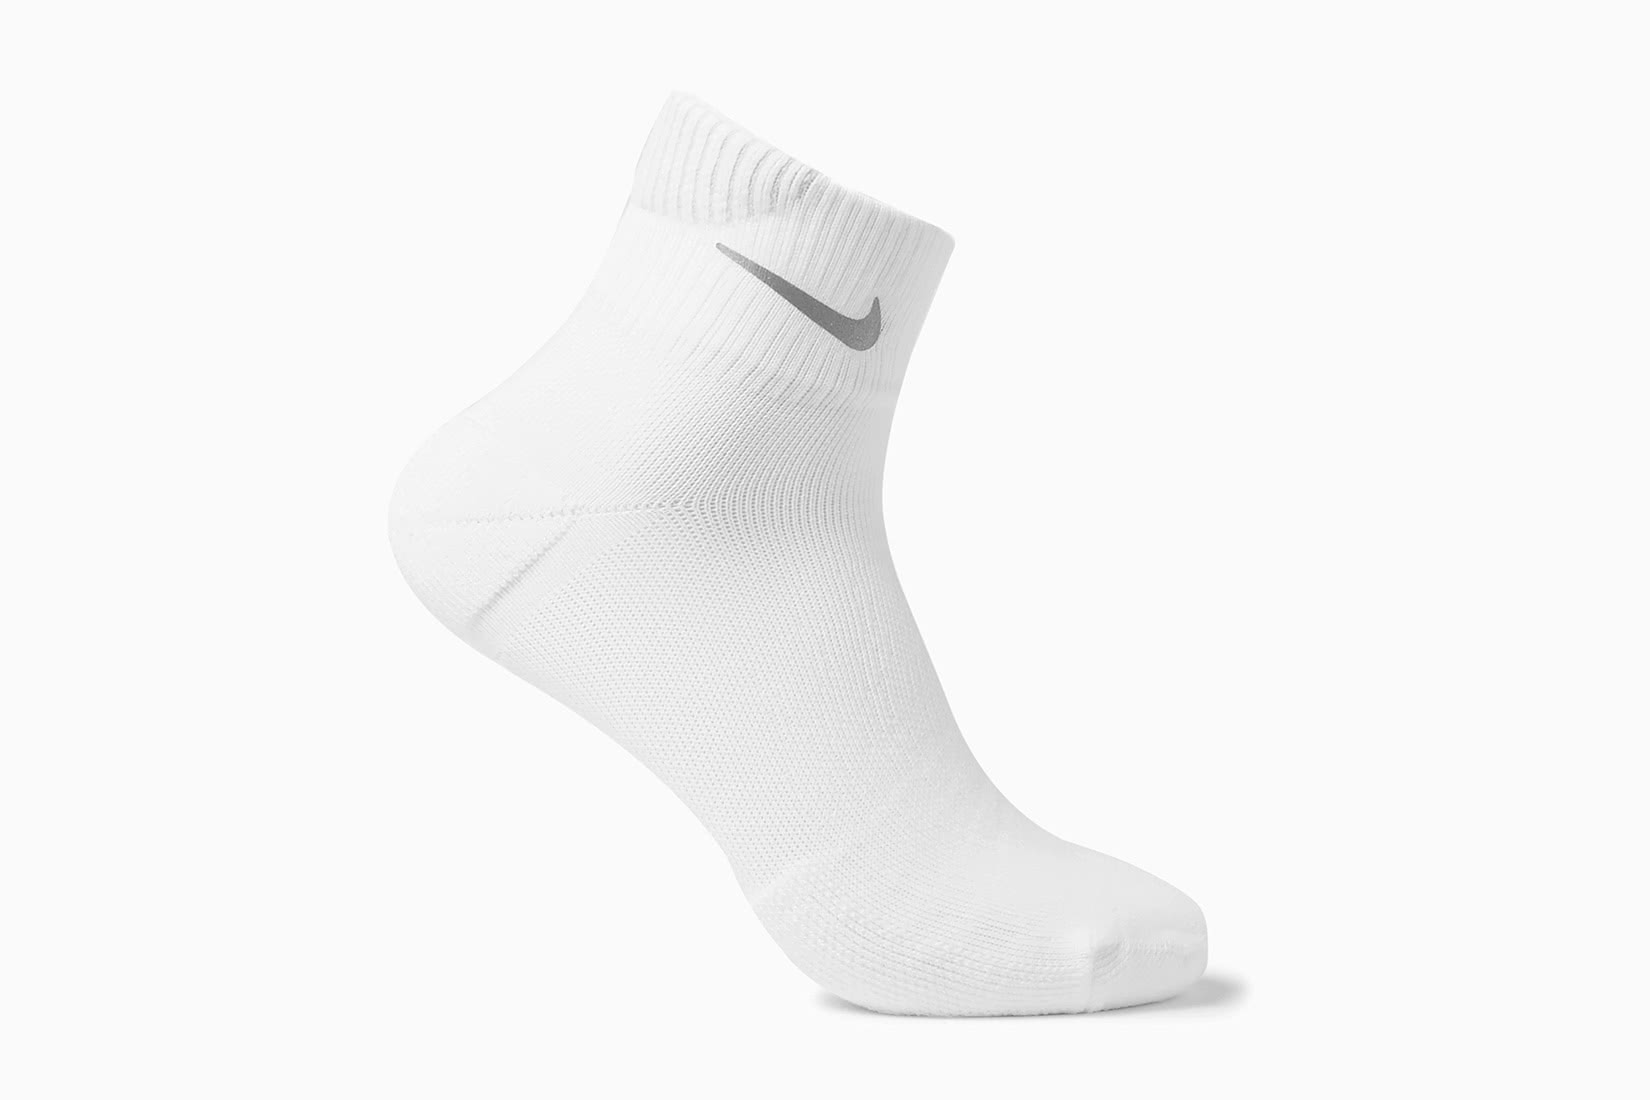 best socks men athletic nike dri fit review - Luxe Digital